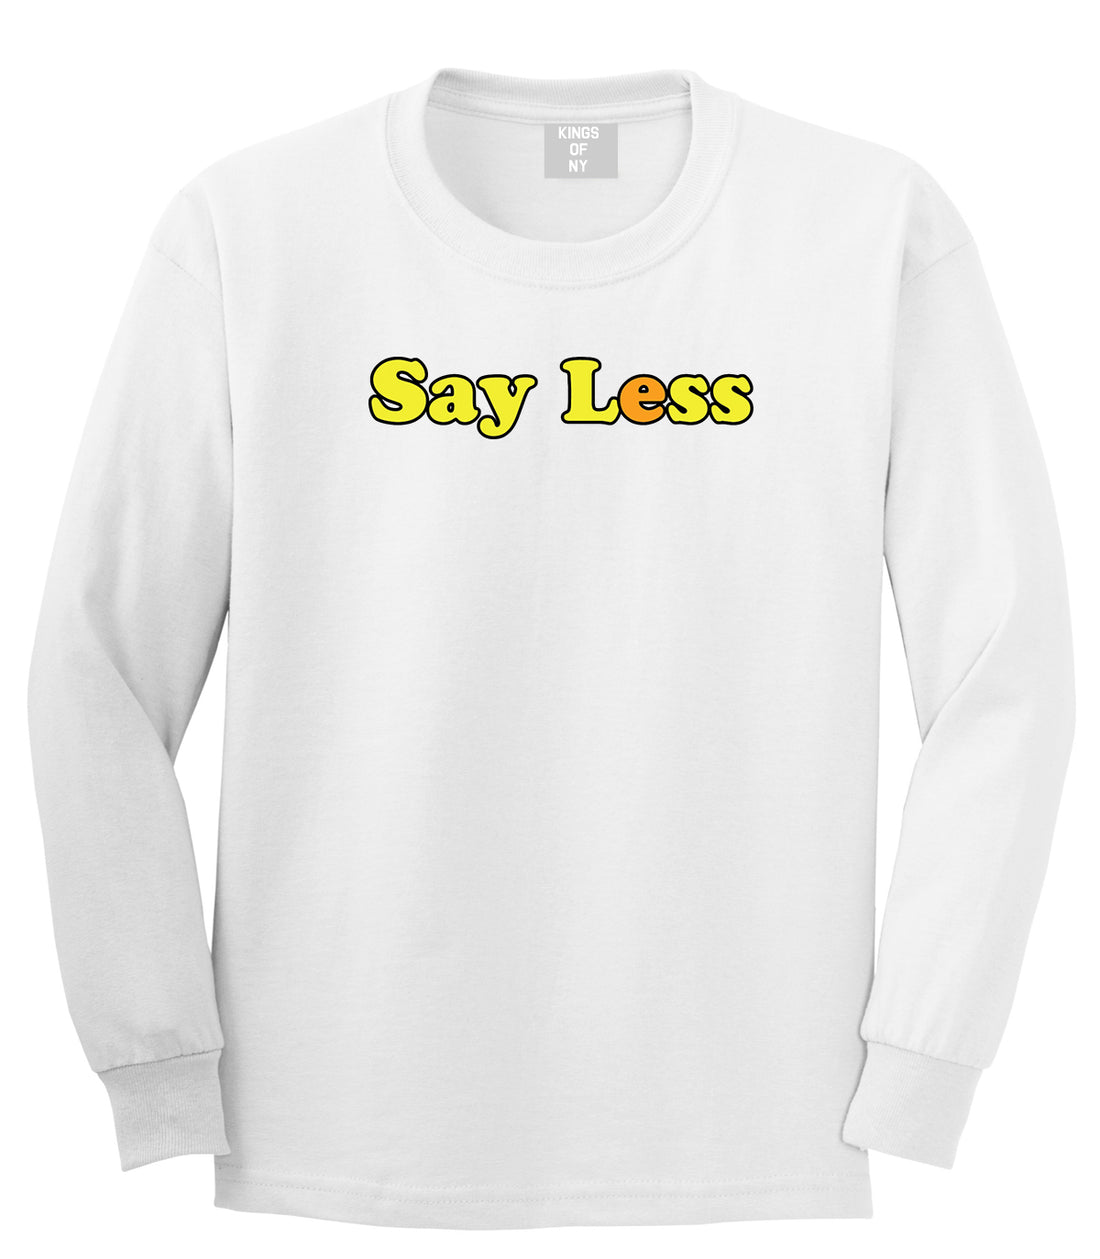 Say Less Mens Long Sleeve T-Shirt White